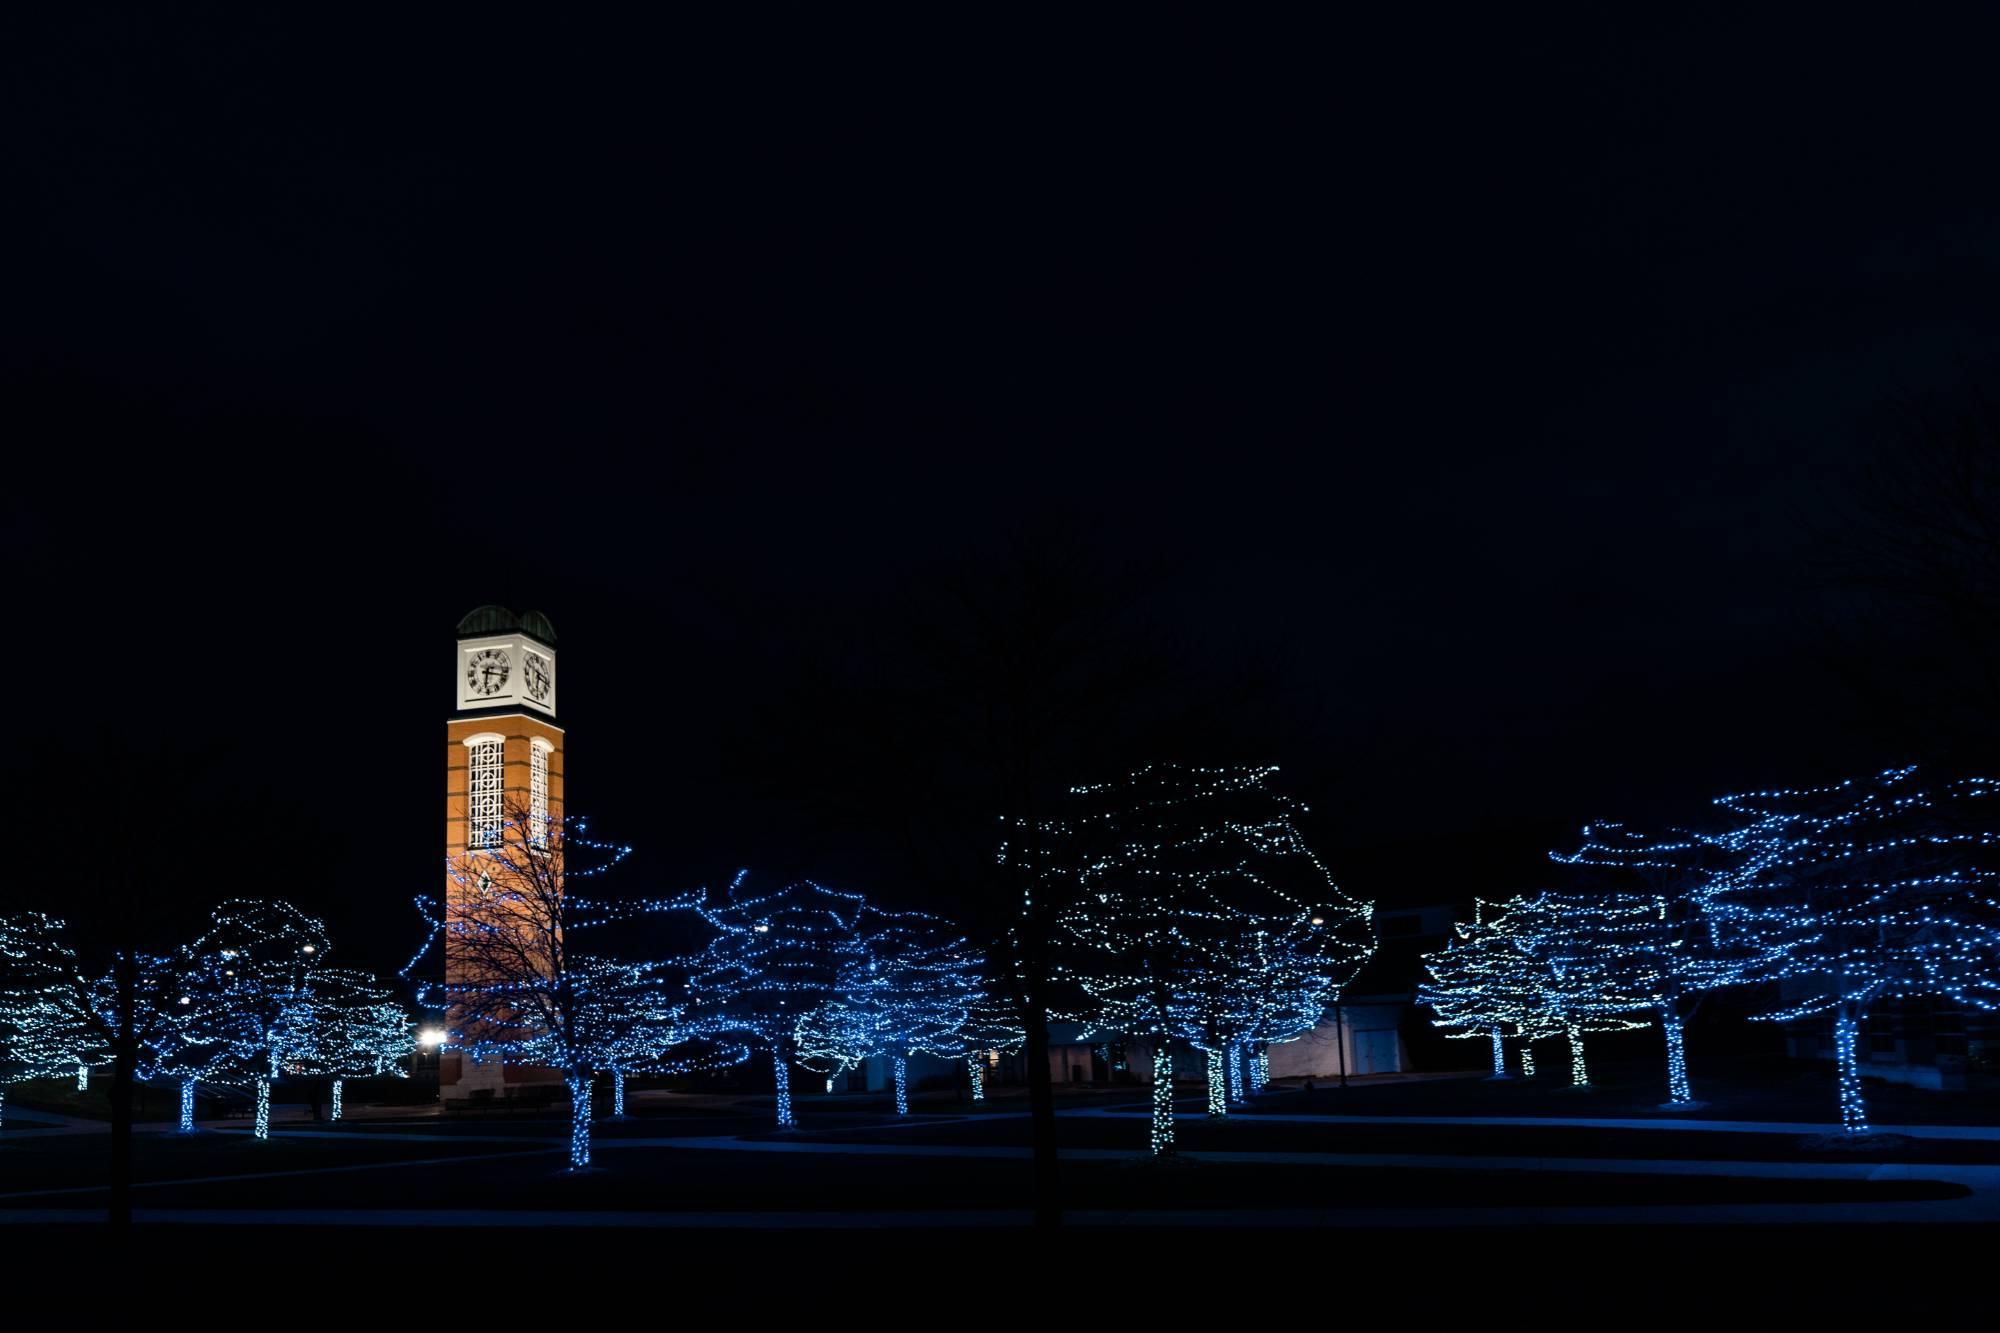 GVSU Allendale校区的Cook Carillon塔楼，夜晚灯火通明